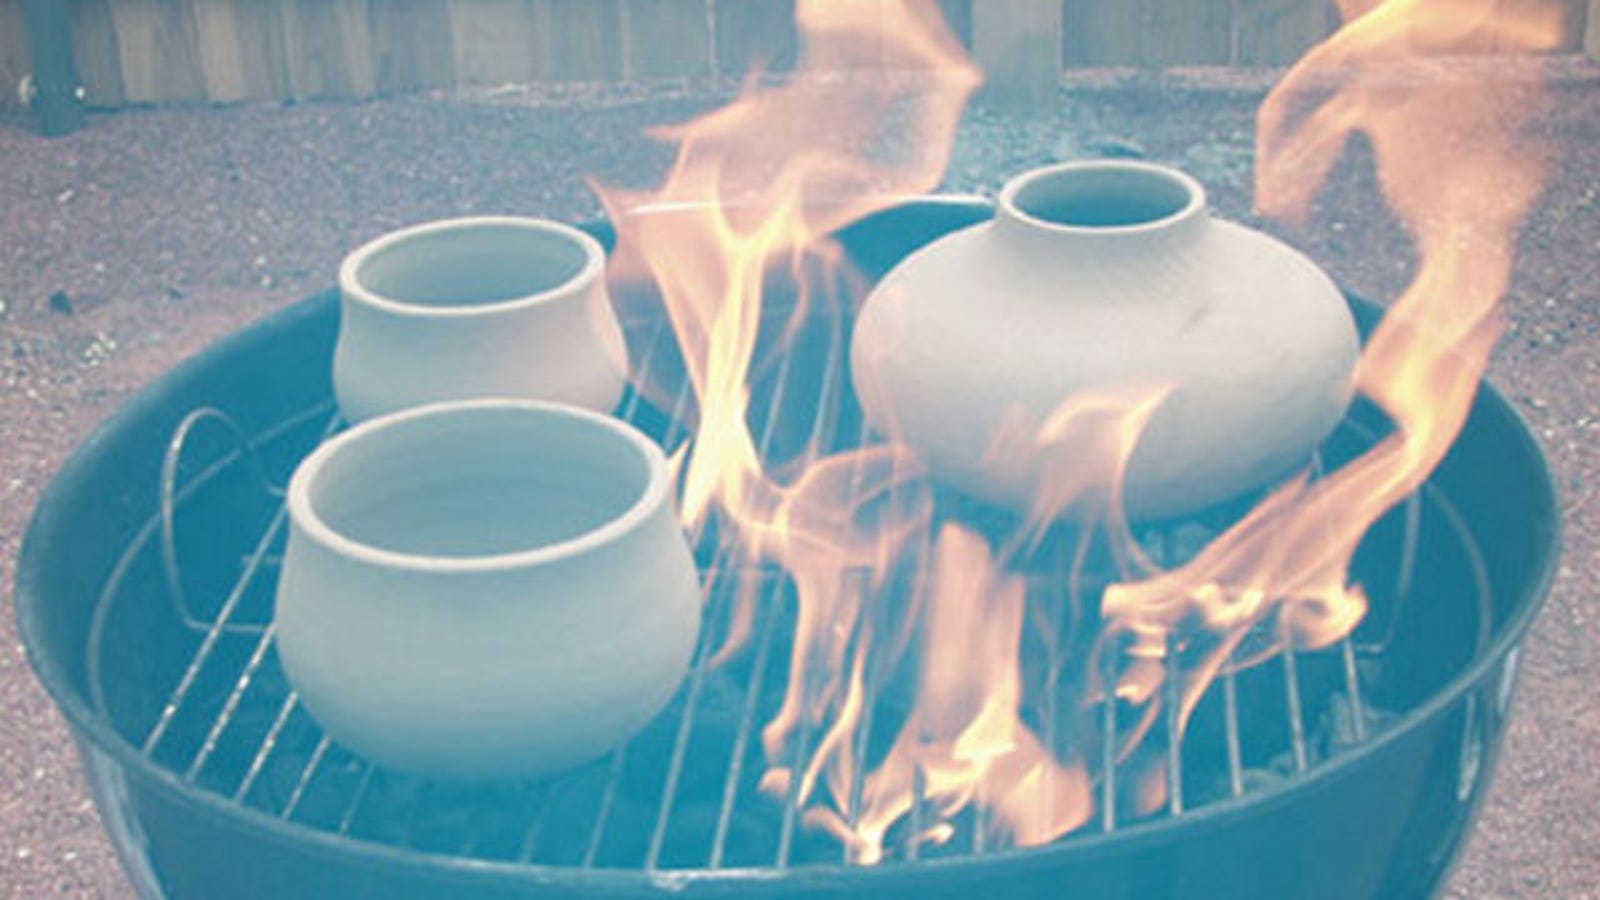 kiln pottery fire ceramic grill clay pit charcoal diy ceramics firing arts daily using kilns lifehacker electric cooking vase tools